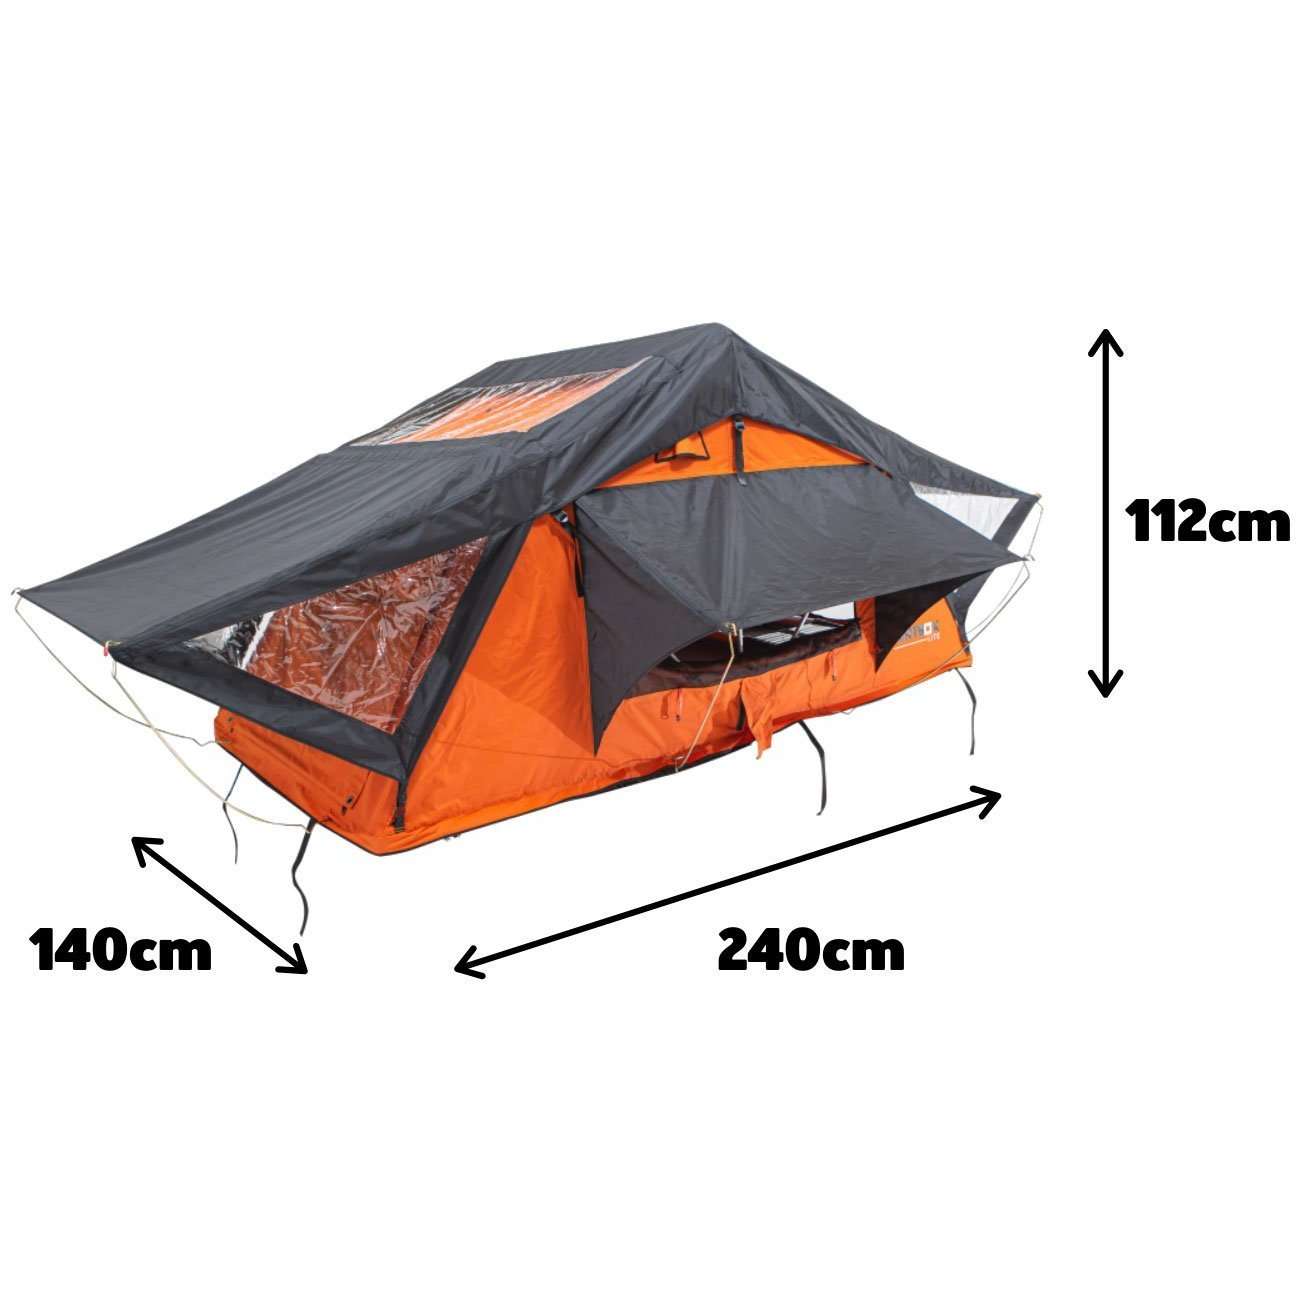 TentBox, TentBox Lite Roof Tent, Tents, Wylies Outdoor World,